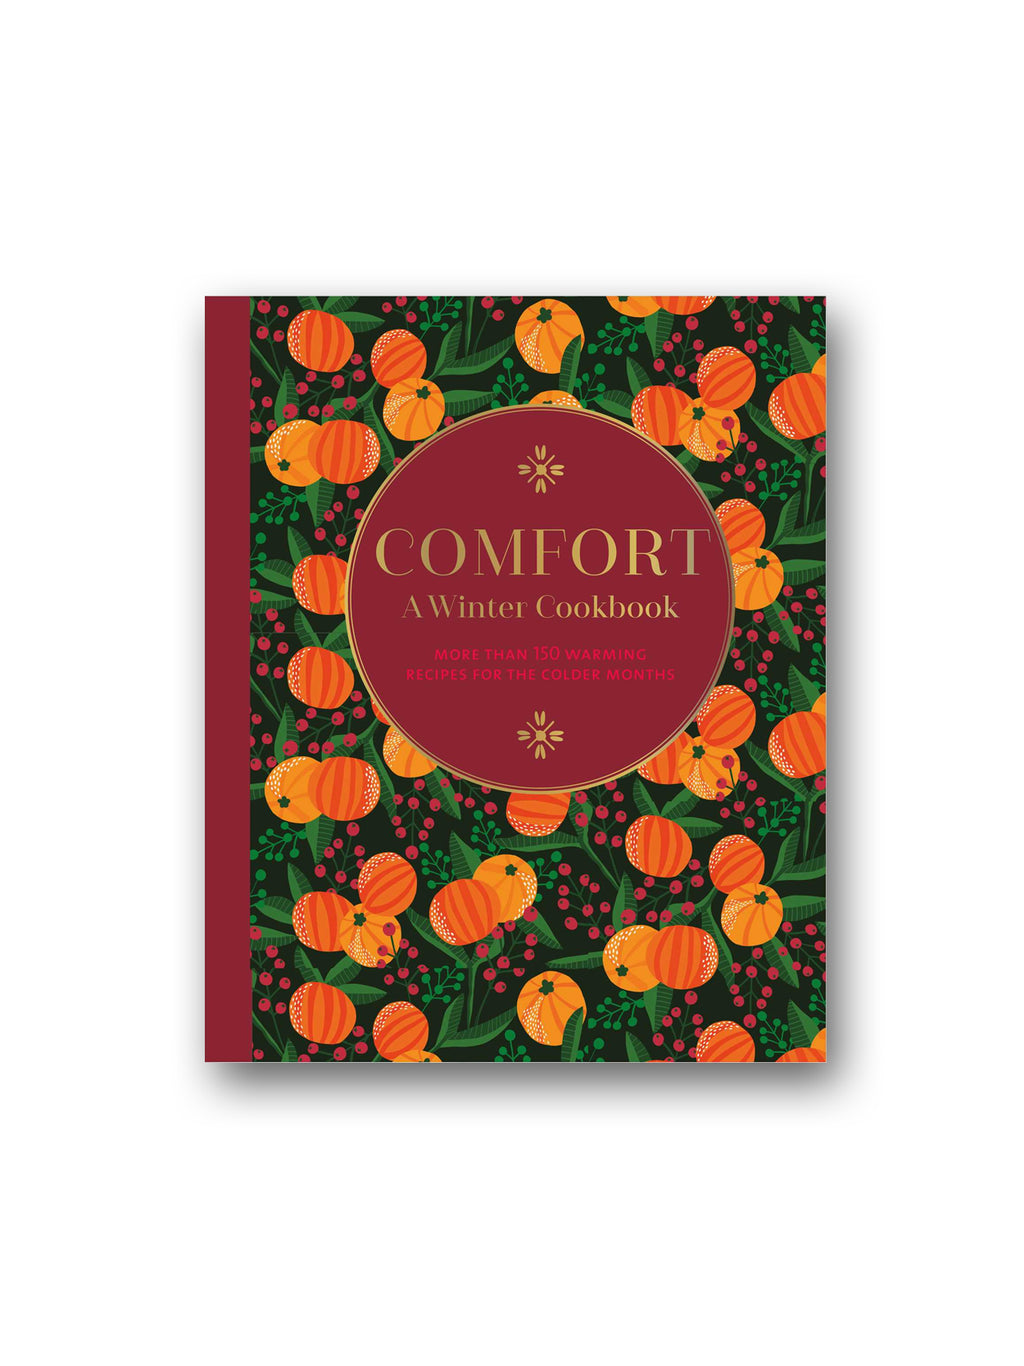 Comfort: A Winter Cookbook